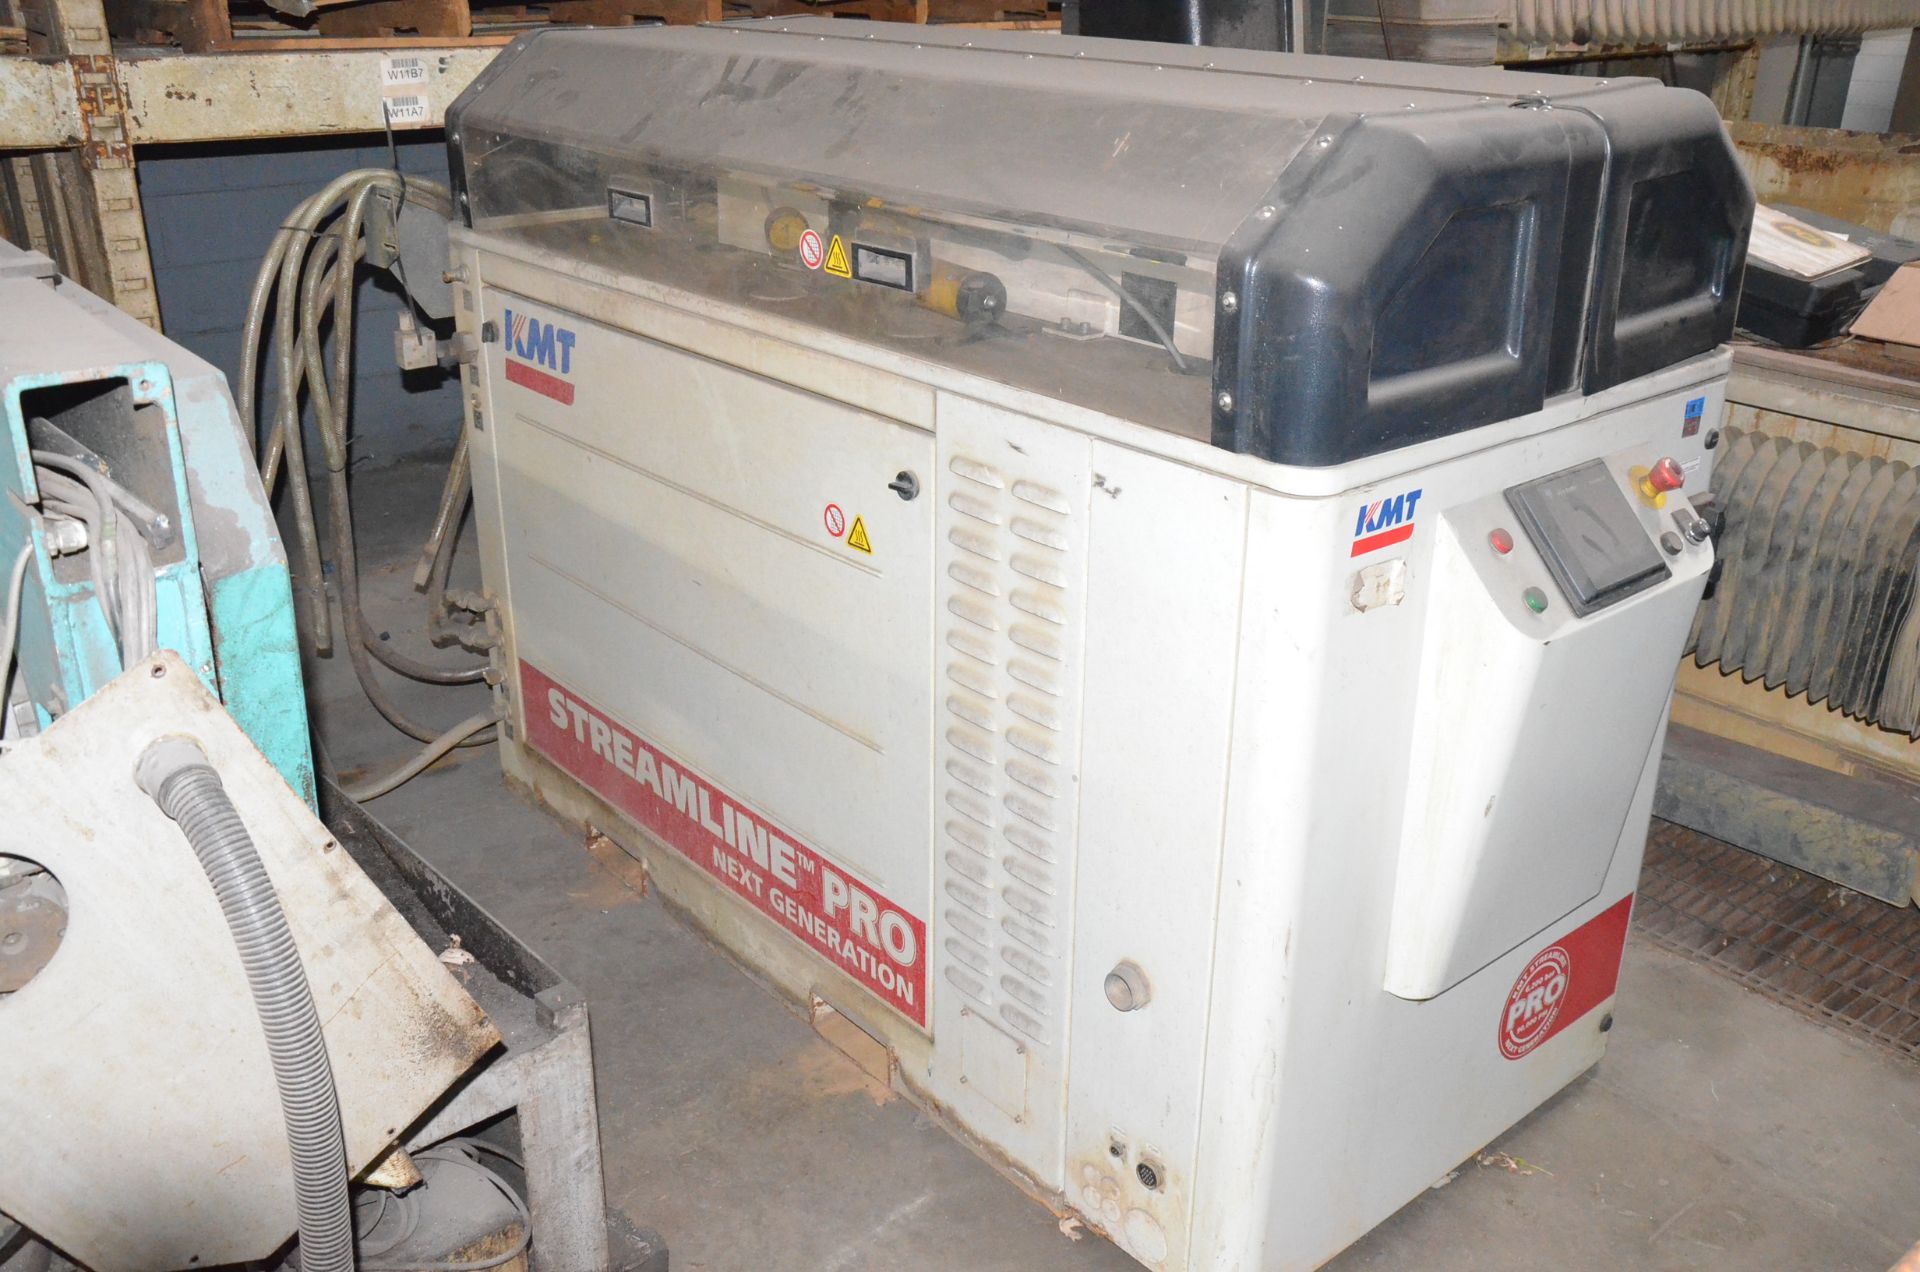 MULTI CAM (2013) 3000 SERIES CNC WATERJET CUTTING MACHINE WITH MULTI CAM CNC CONTROL, KMT STREAMLINE - Image 9 of 13